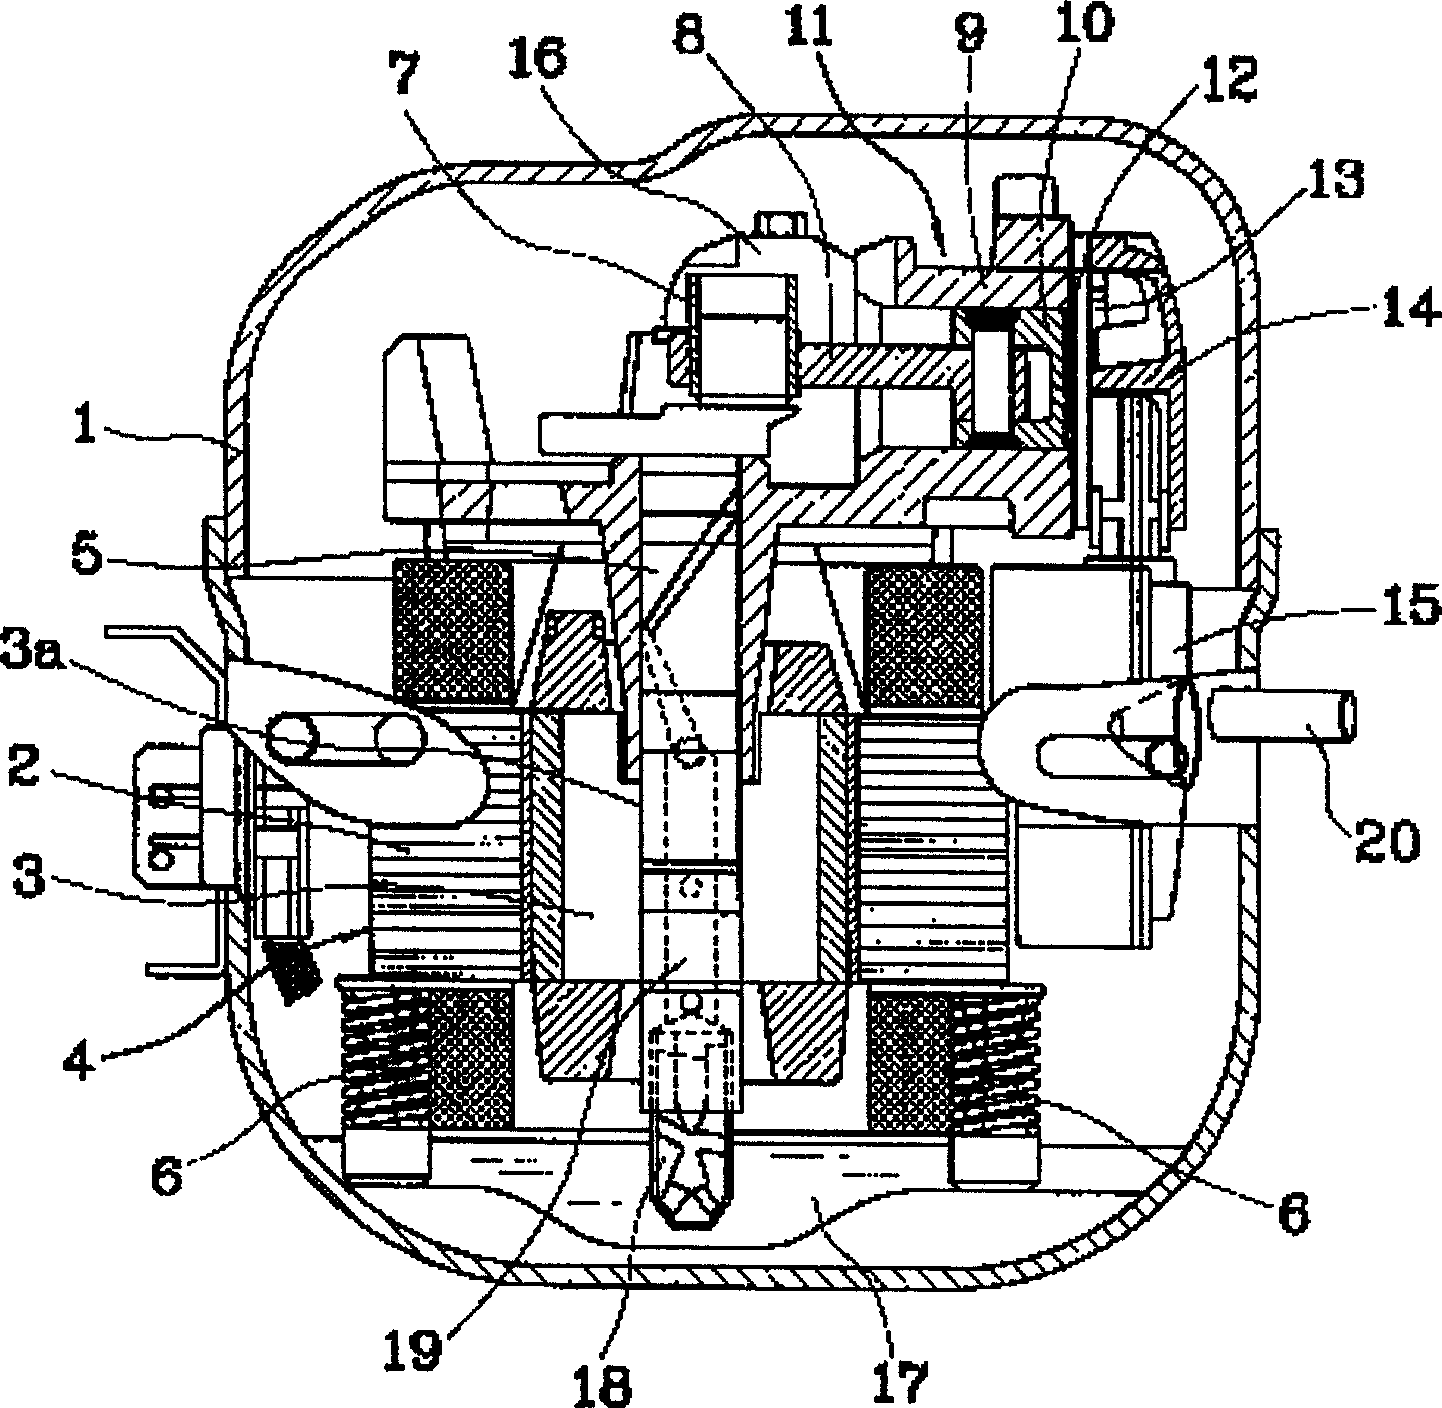 Reciprocating motion type compressor using resonance